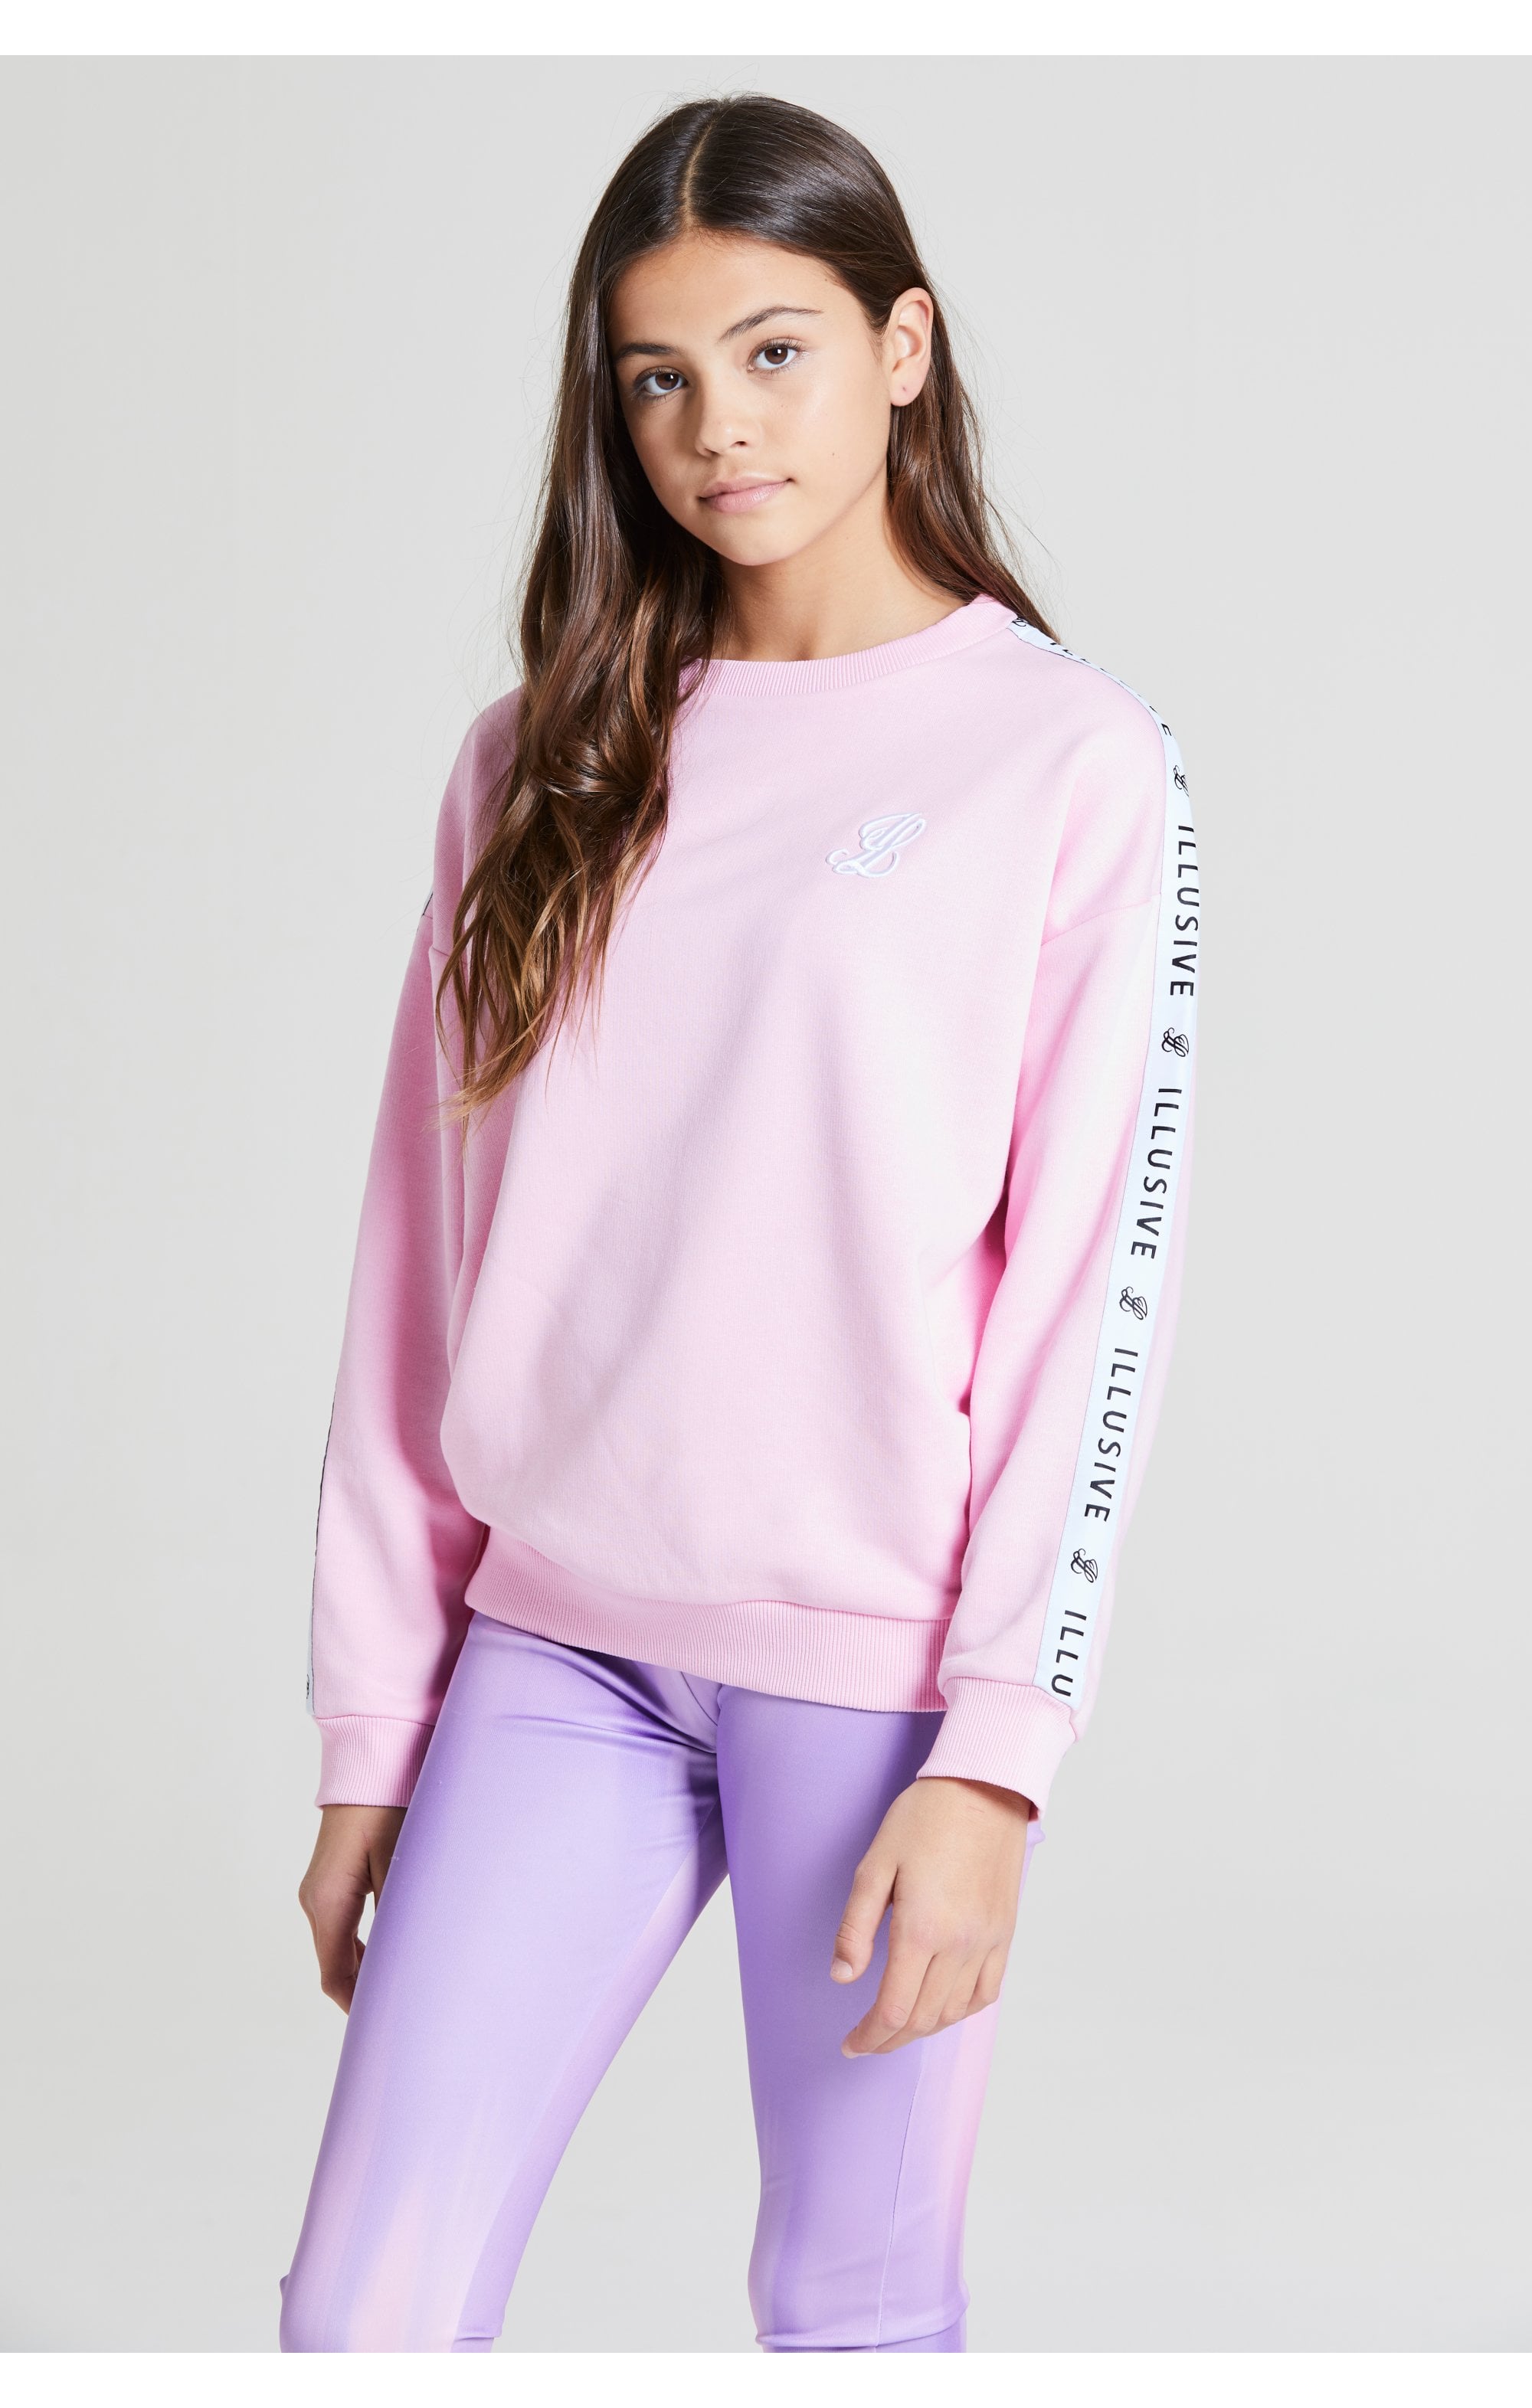 Illusive London Crew Neck Sweater - Pink (2)